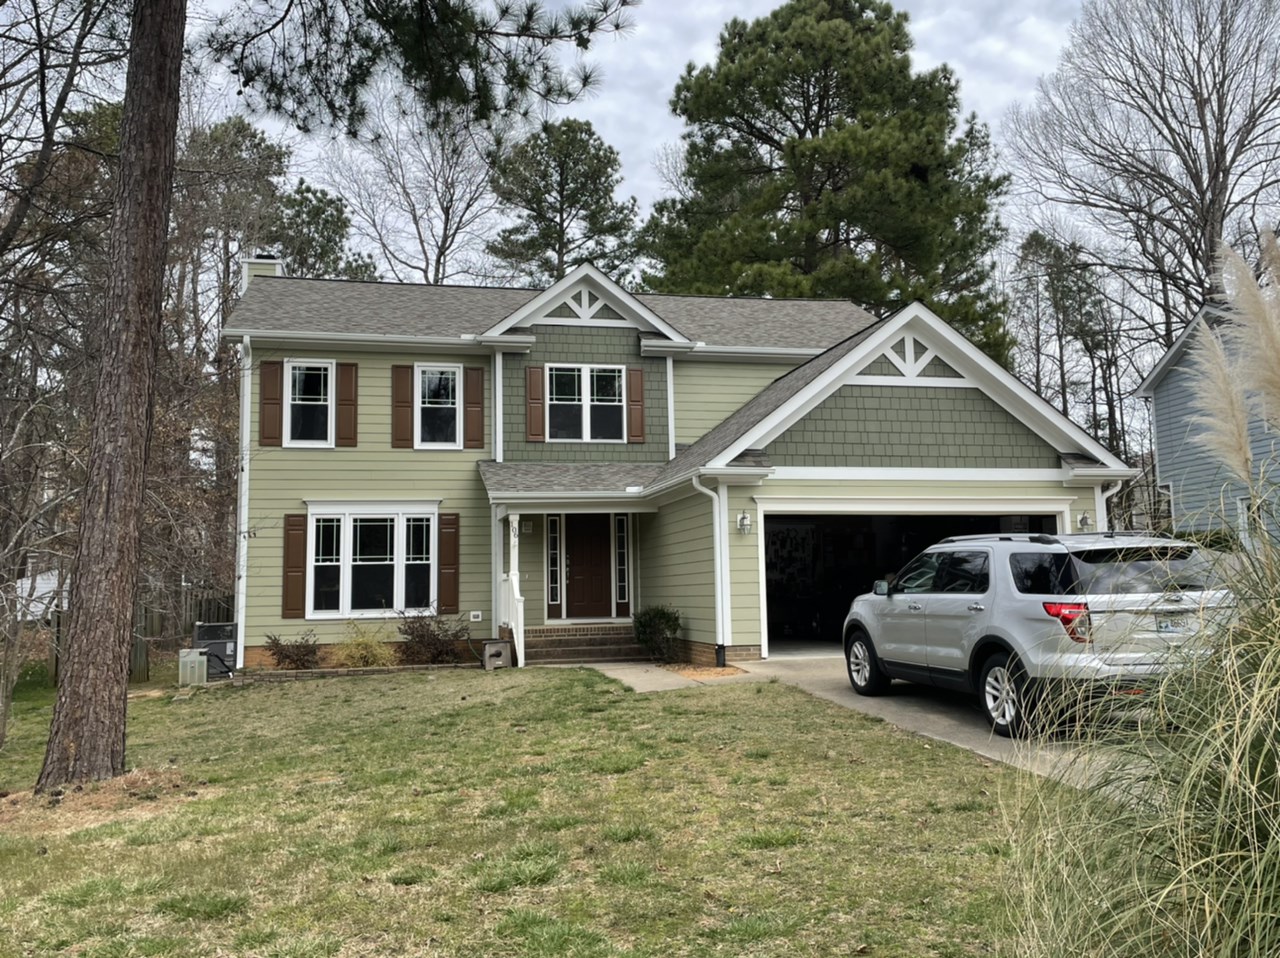 Durham, NC – James Hardie Siding, Pella Window, Roof & Gutter Replacement